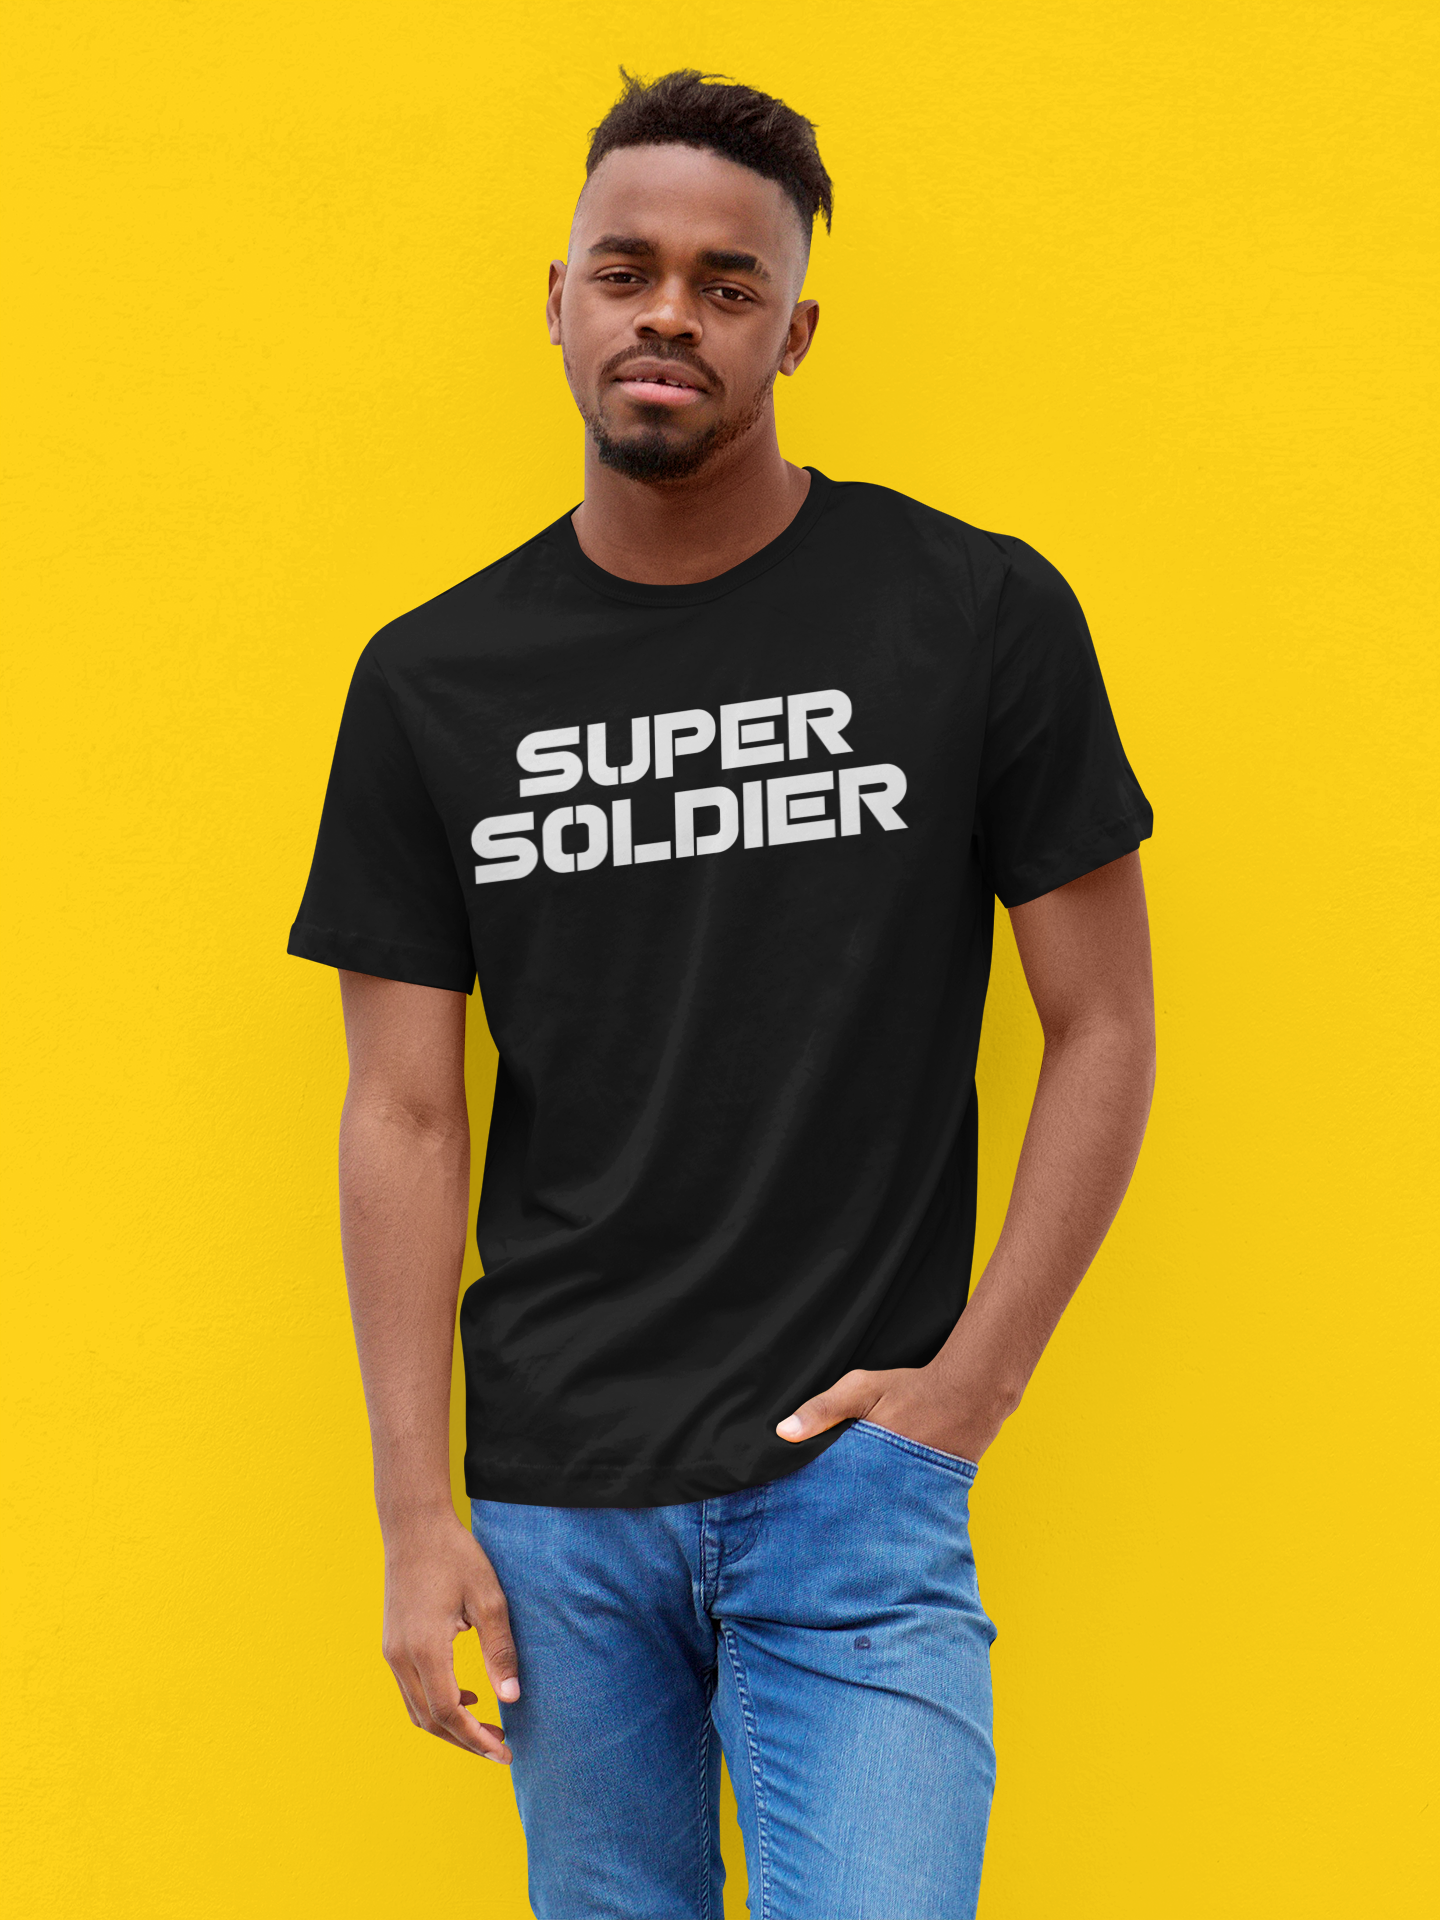 Super Soldier Premium T-Shirt